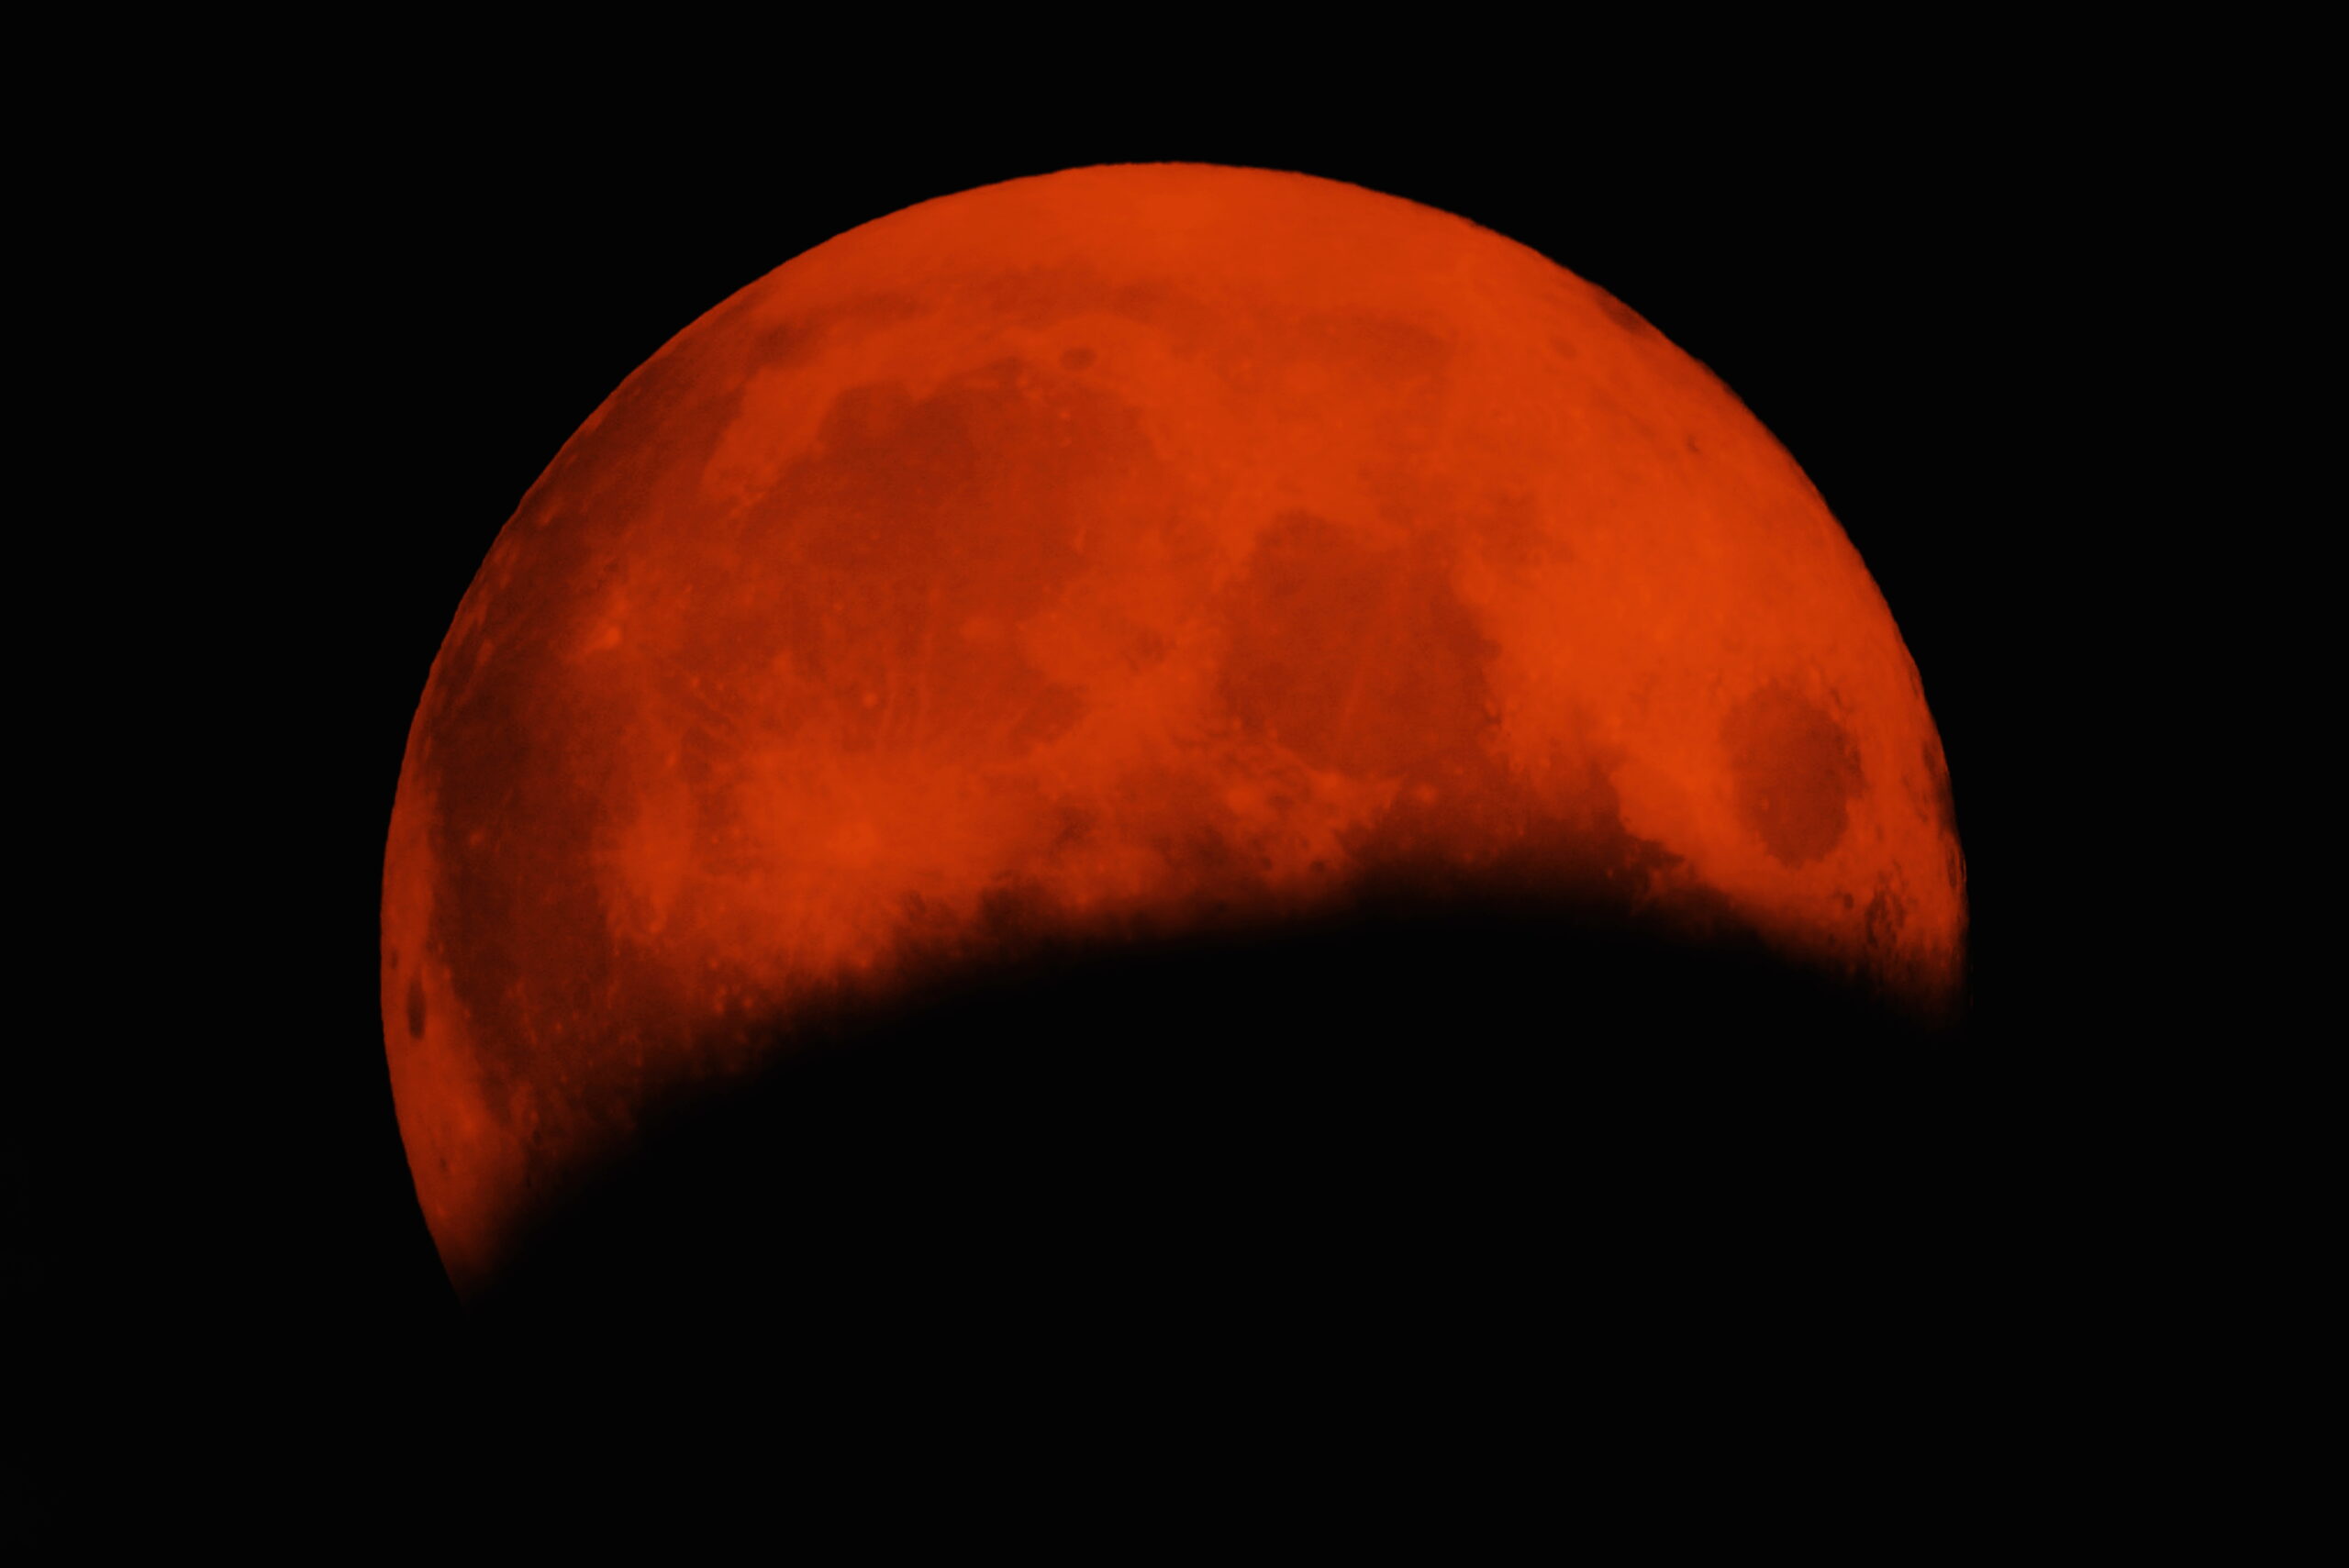 1st Eclipse of 2021: A Super Blood Total Lunar Eclipse